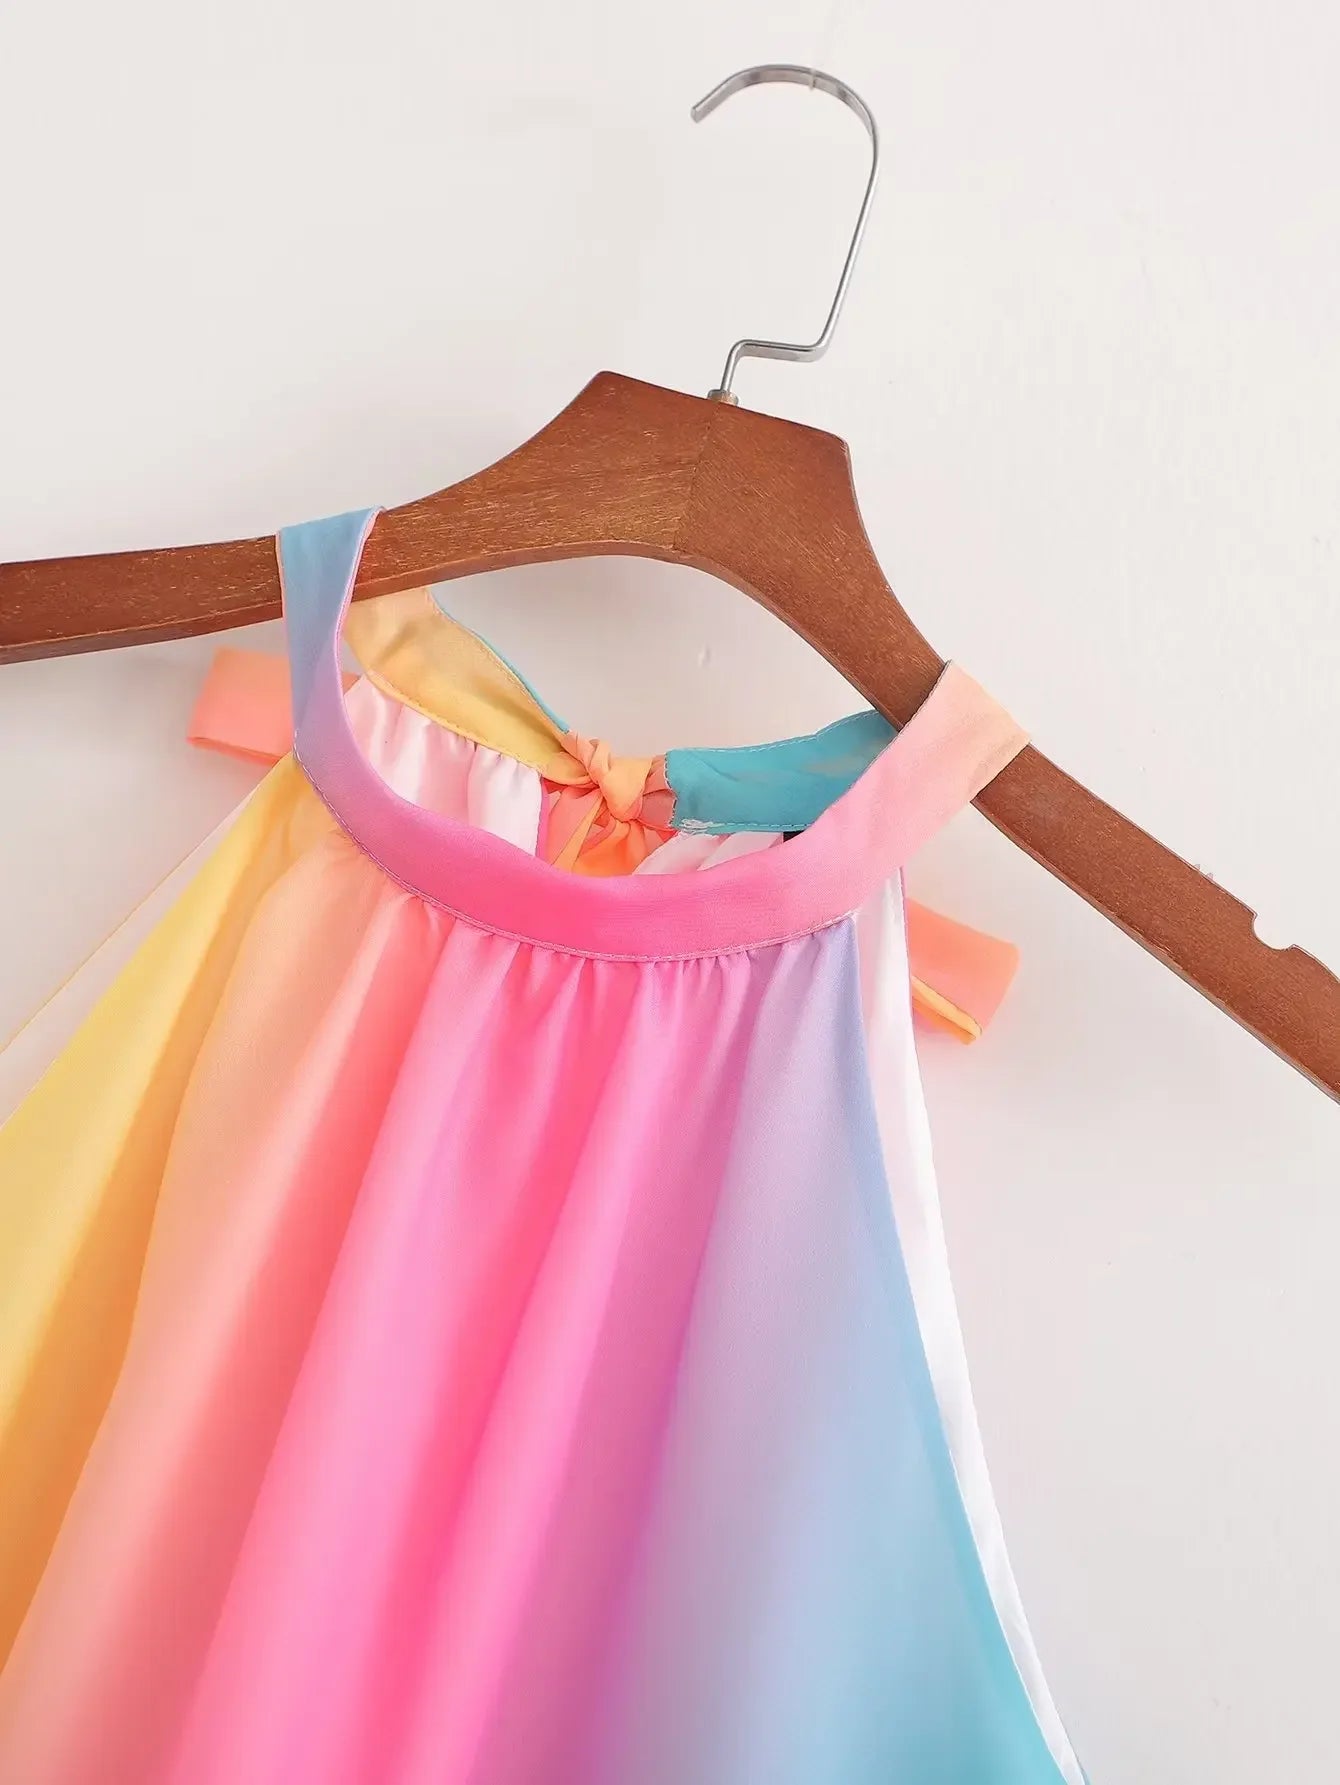 SLTNX TRAF Rainbow Mini Dresse for Women Fashion Chiffon Sleeveless Dresses Ladies Chic Lace-up A-Line Casual Loose Dress New In - TaMNz